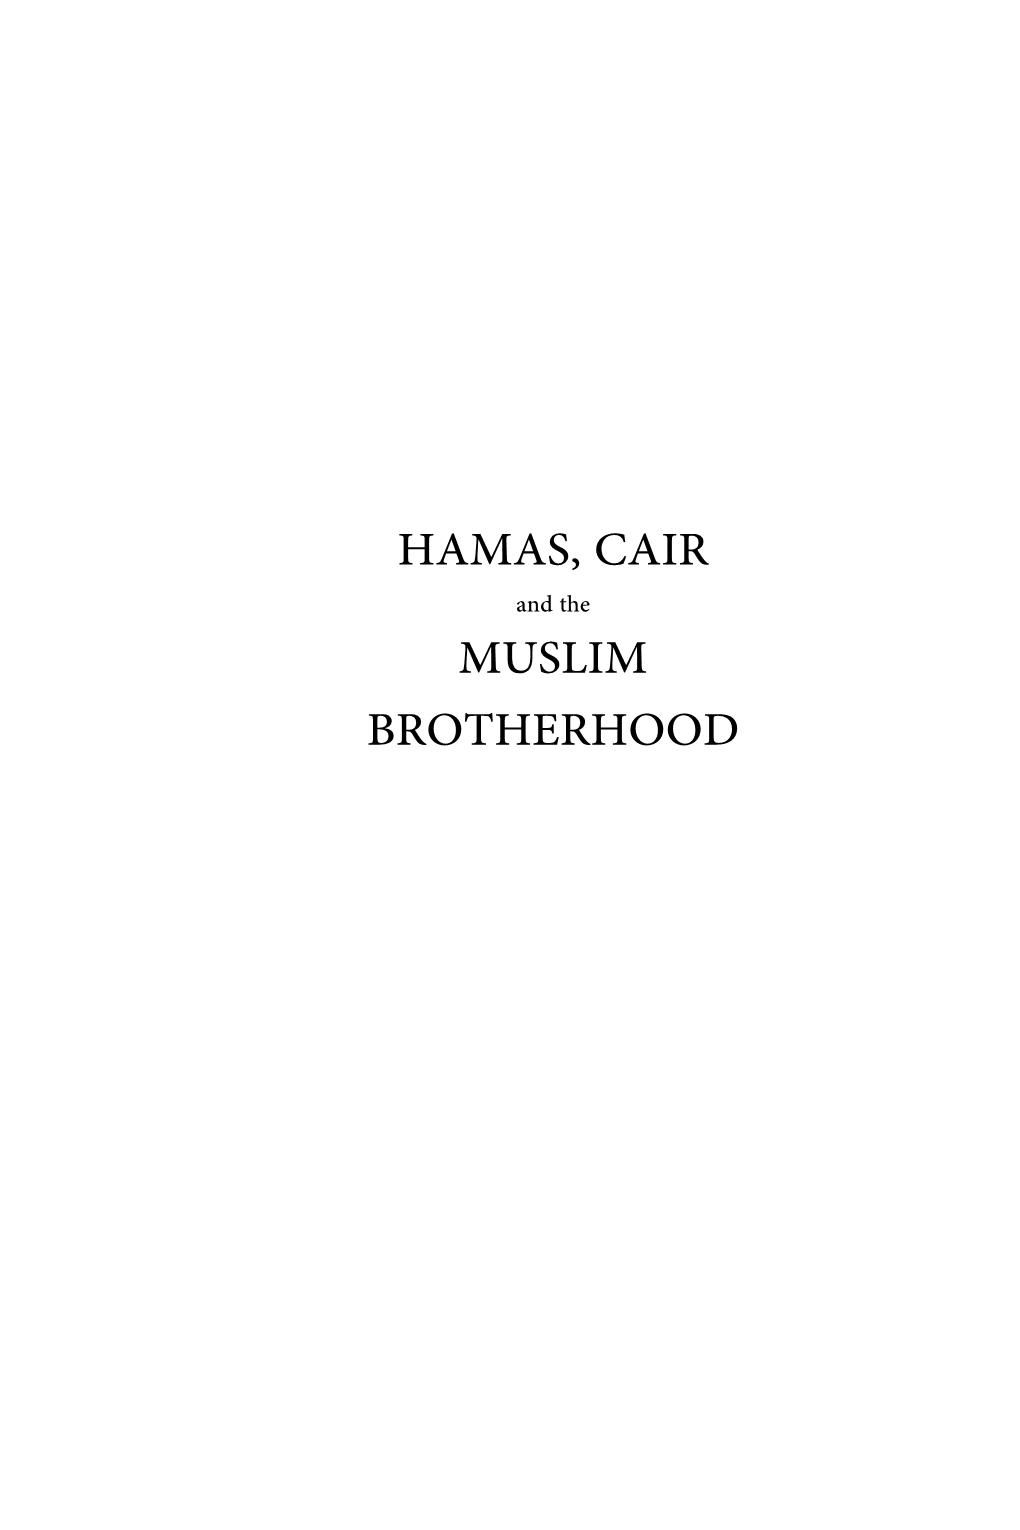 HAMAS, CAIR and the MUSLIM BROTHERHOOD